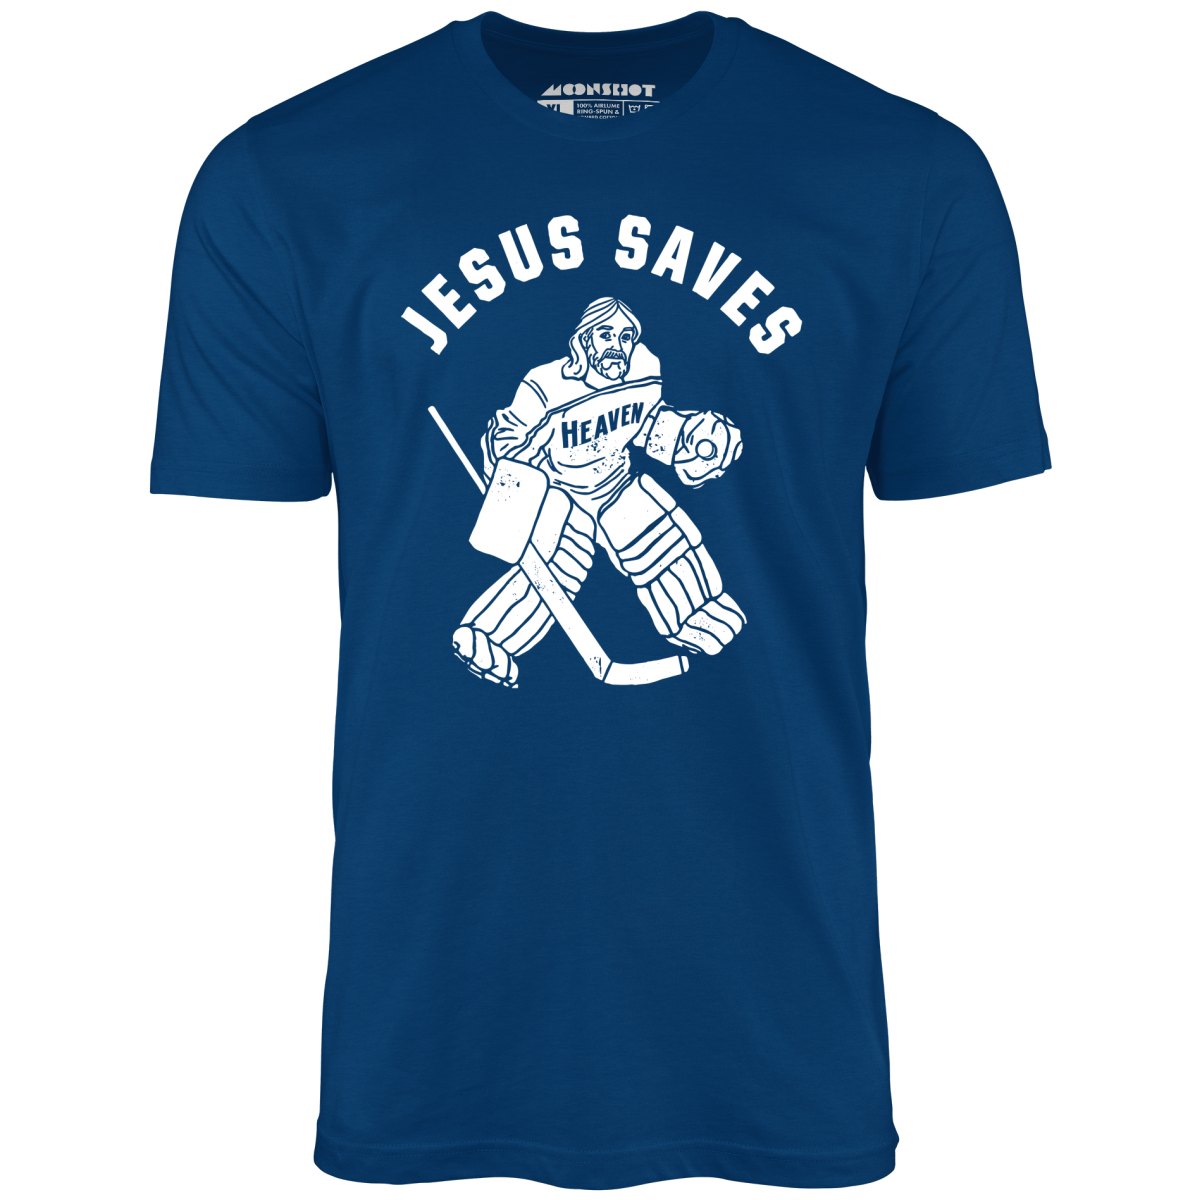 Best Jesus Saves Soccer Goalie T Shirts, Hoodies, Sweatshirts & Merch